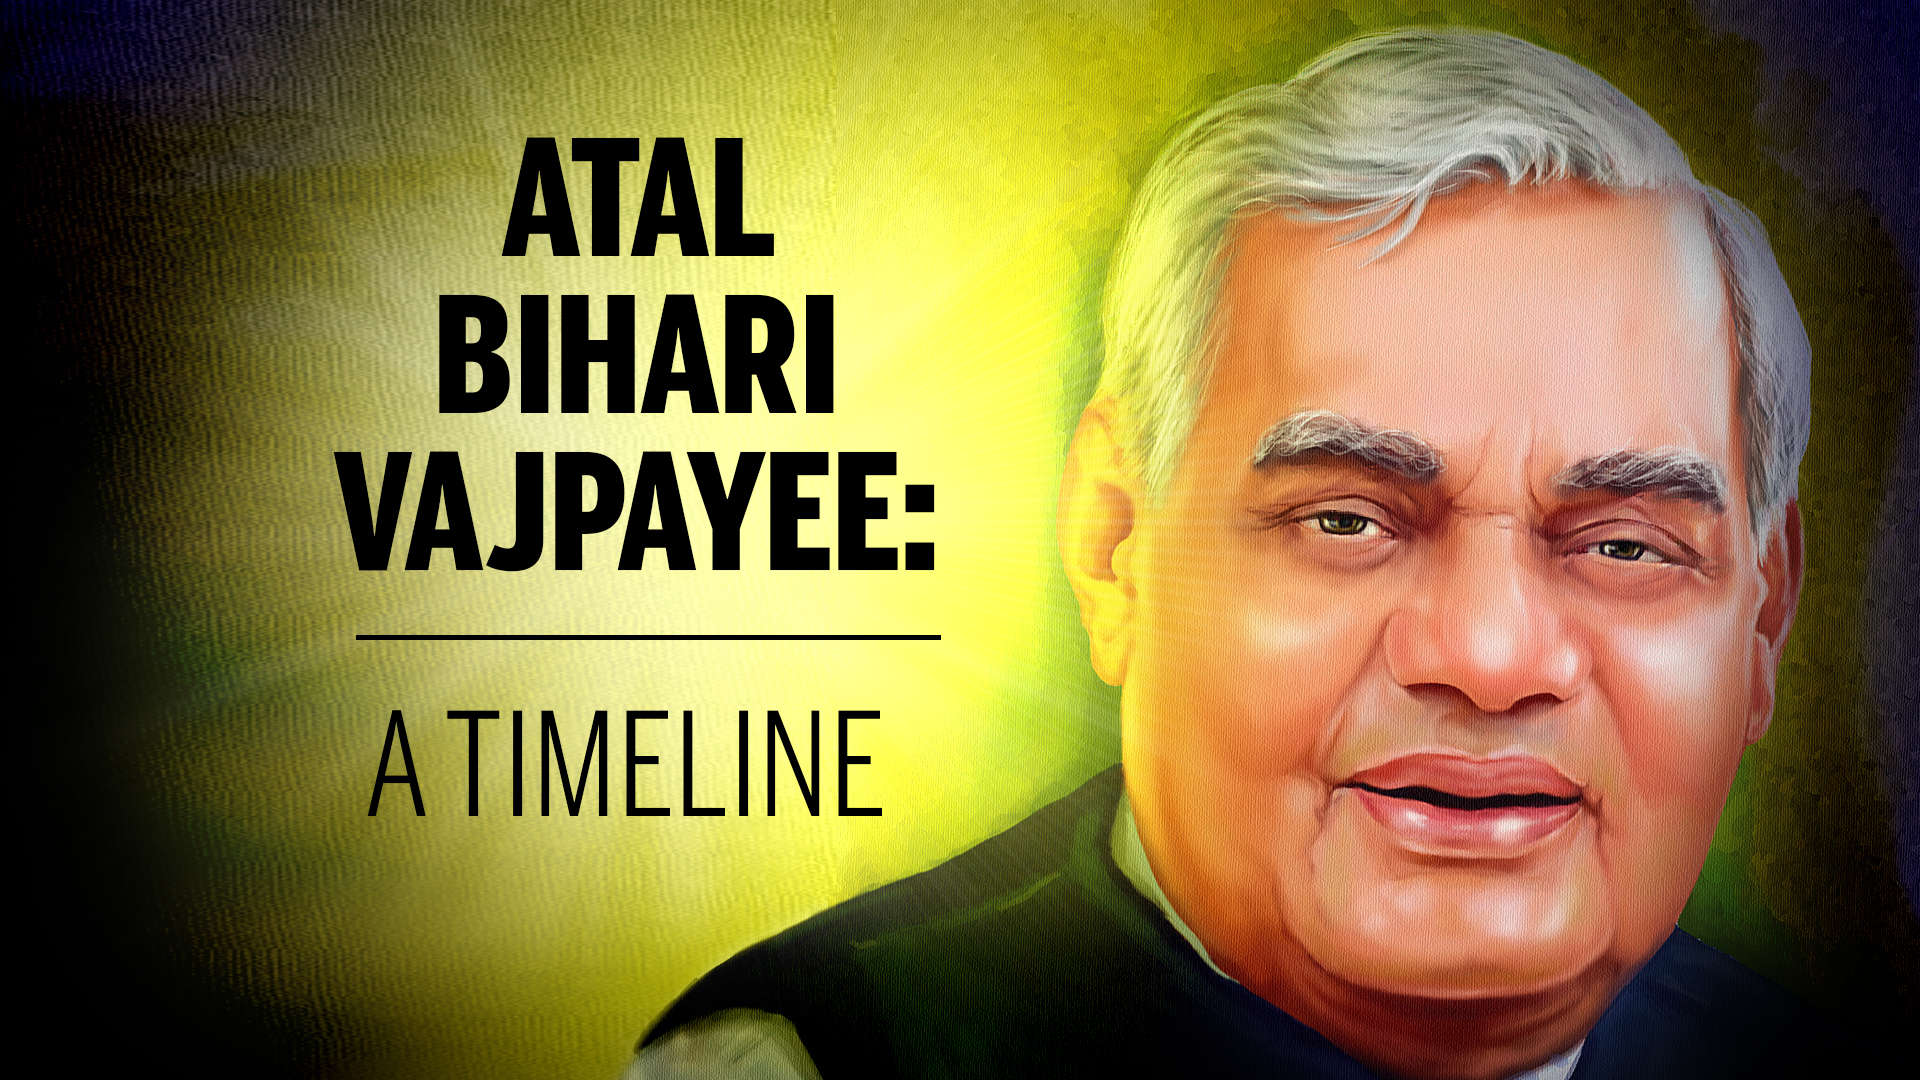 Atal Bihari Vajpayee Images With Quotes - Colaboratory